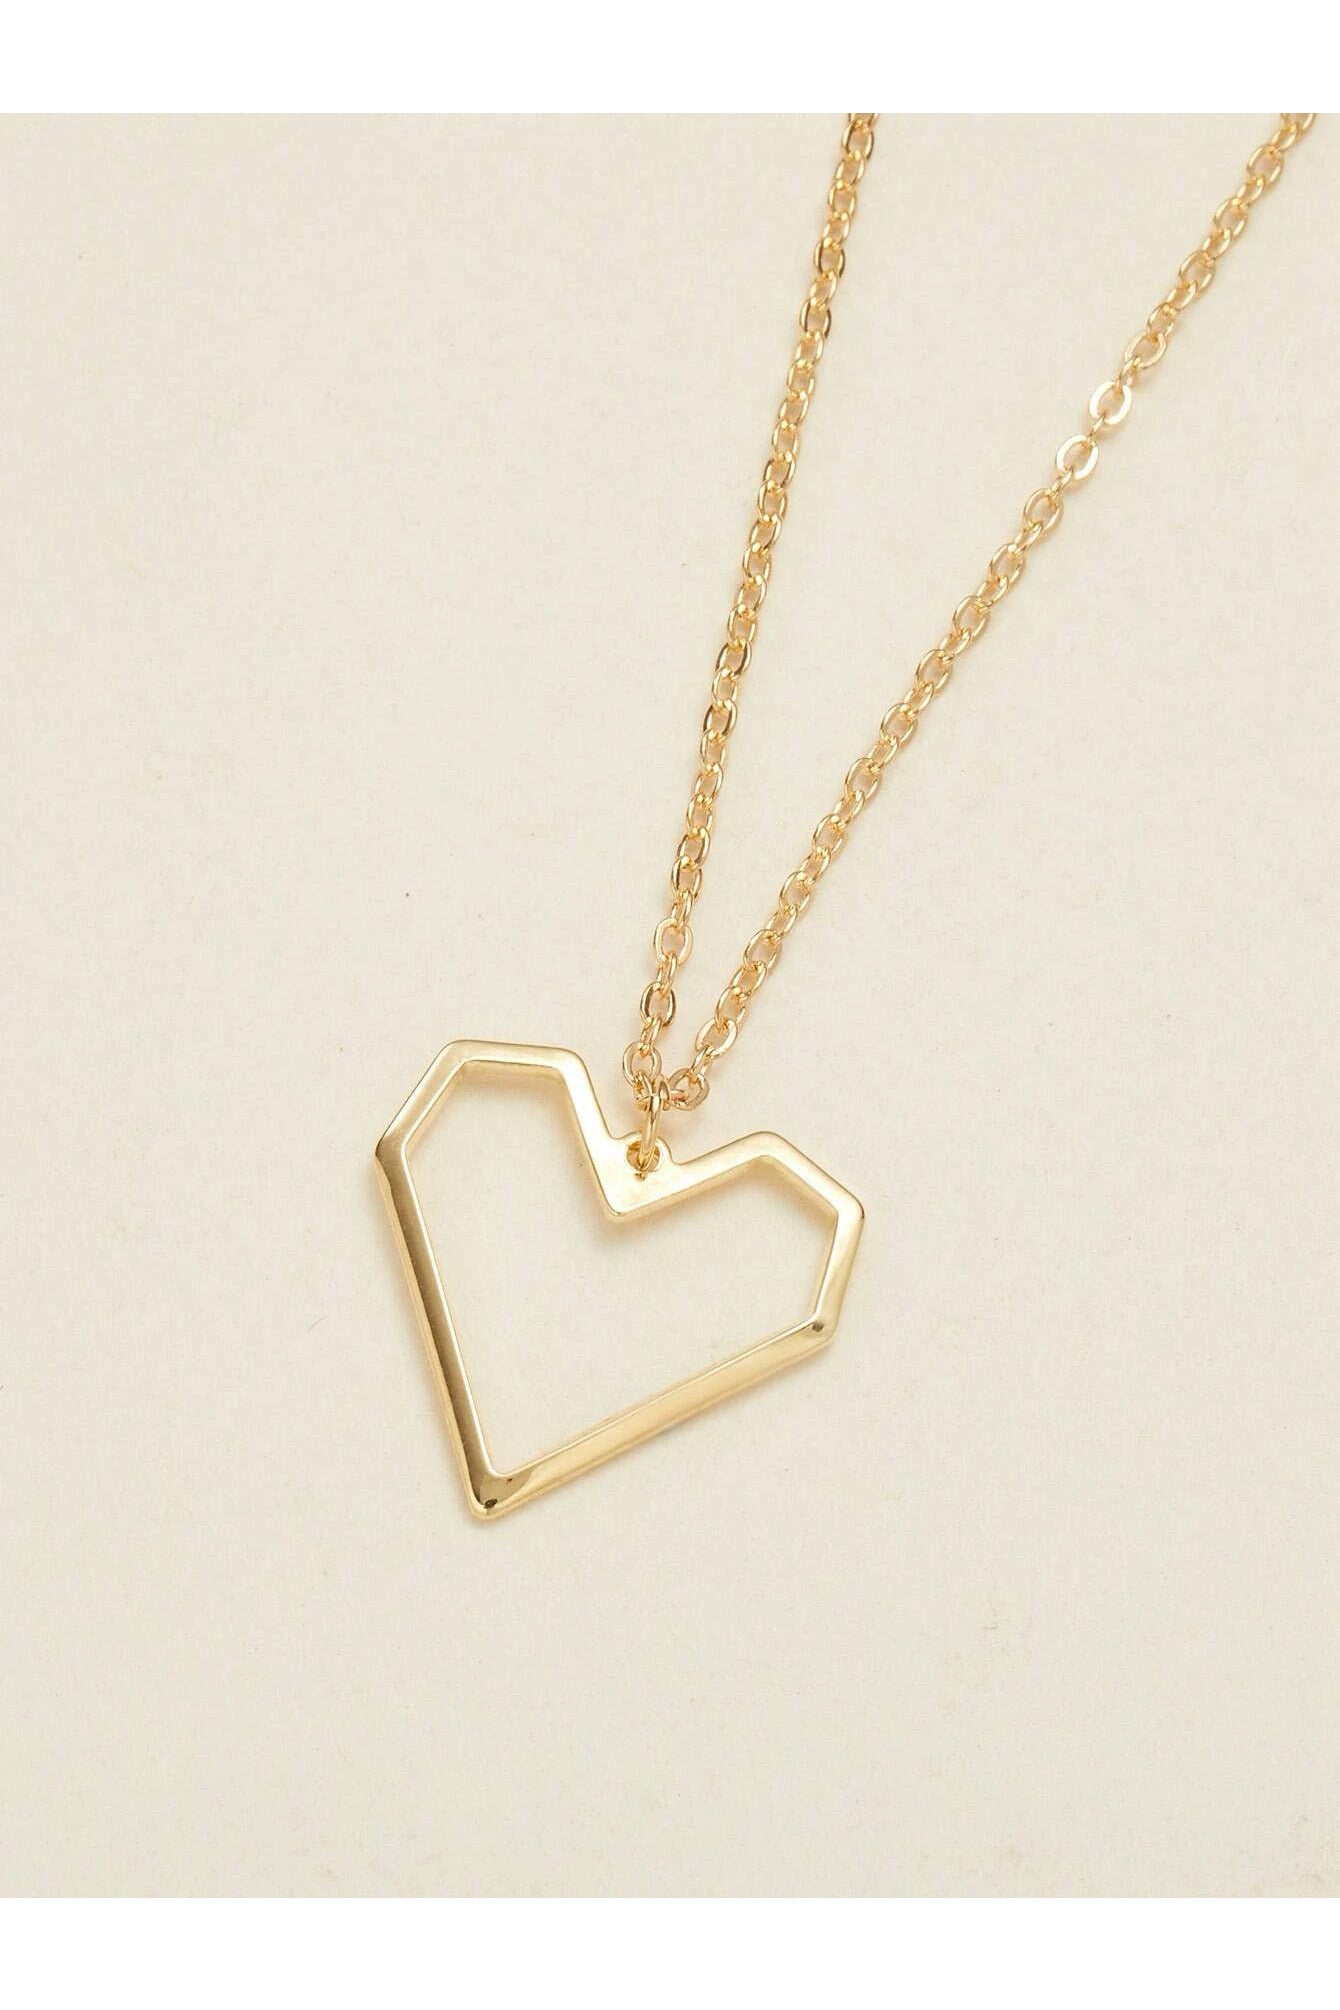 Buy Shein Heart Decor Necklace in Pakistan